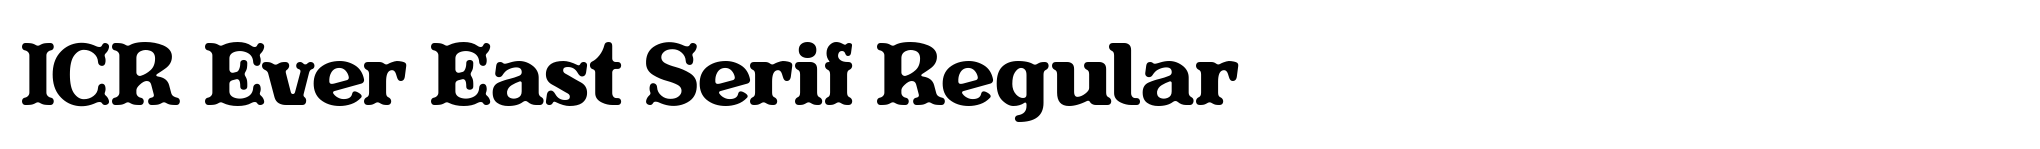 ICR Ever East Serif Regular image